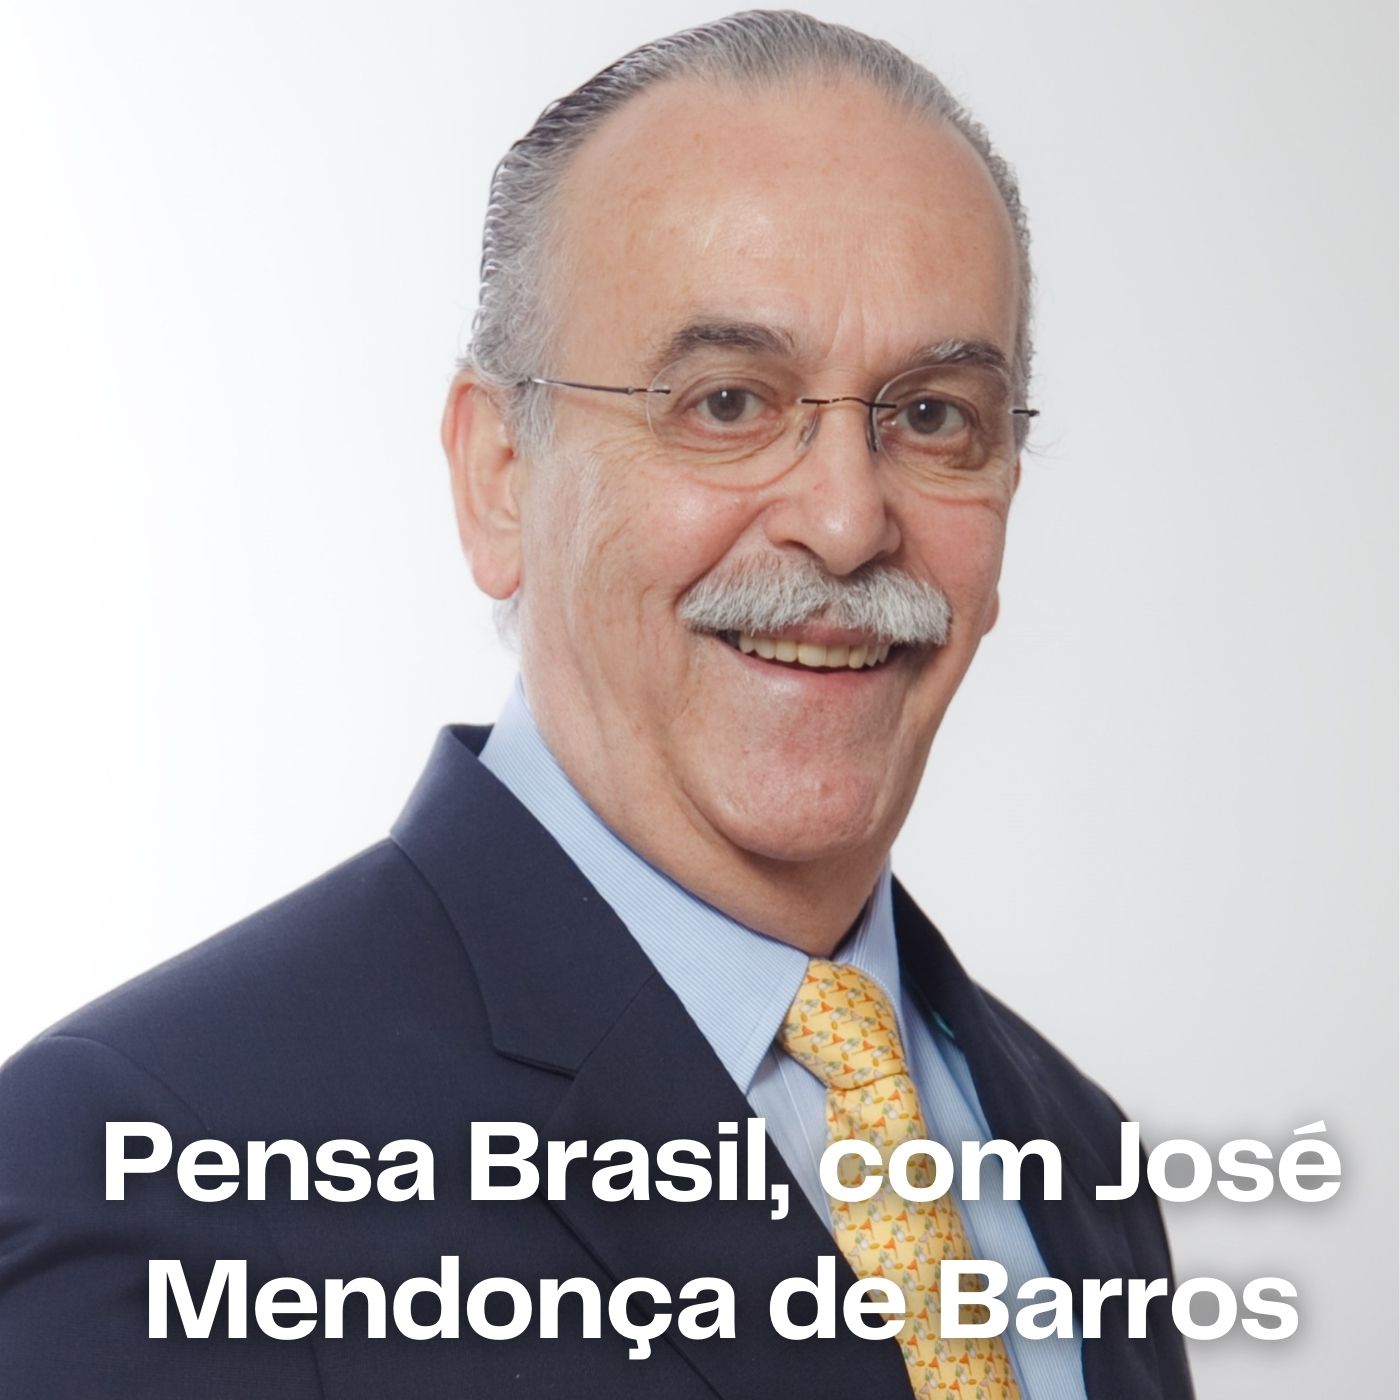 08/06/2021 - Pensa Brasil, José Roberto Mendonça de Barros: Para sair da crise, precisamos usar a tecnologia